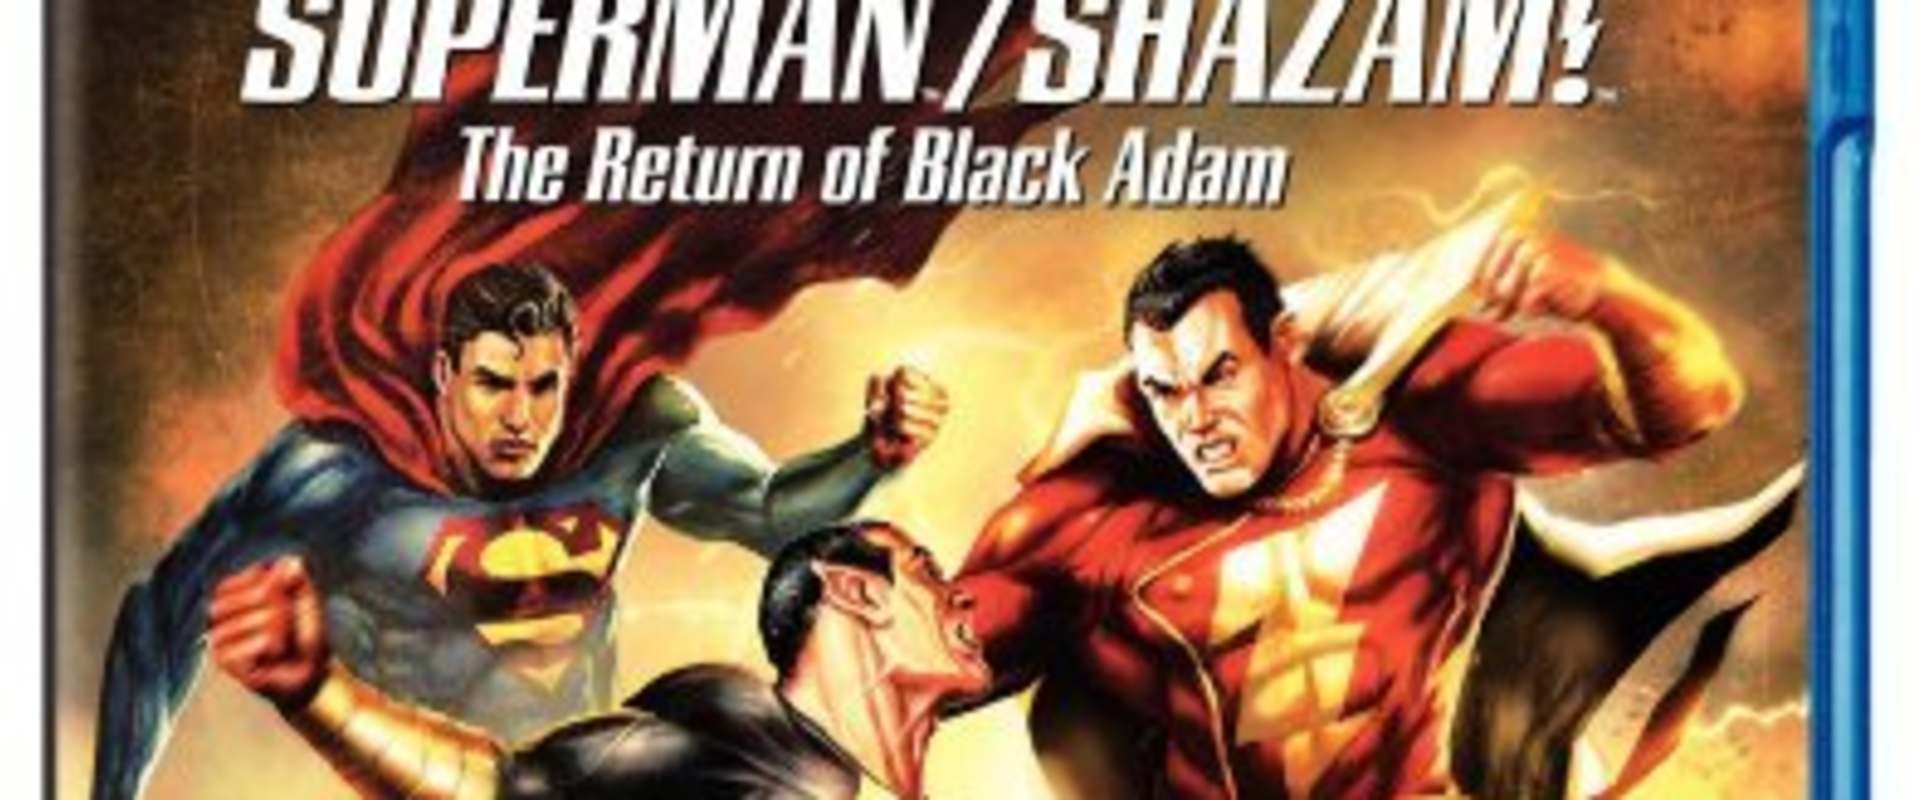 Superman/Shazam!: The Return of Black Adam background 2